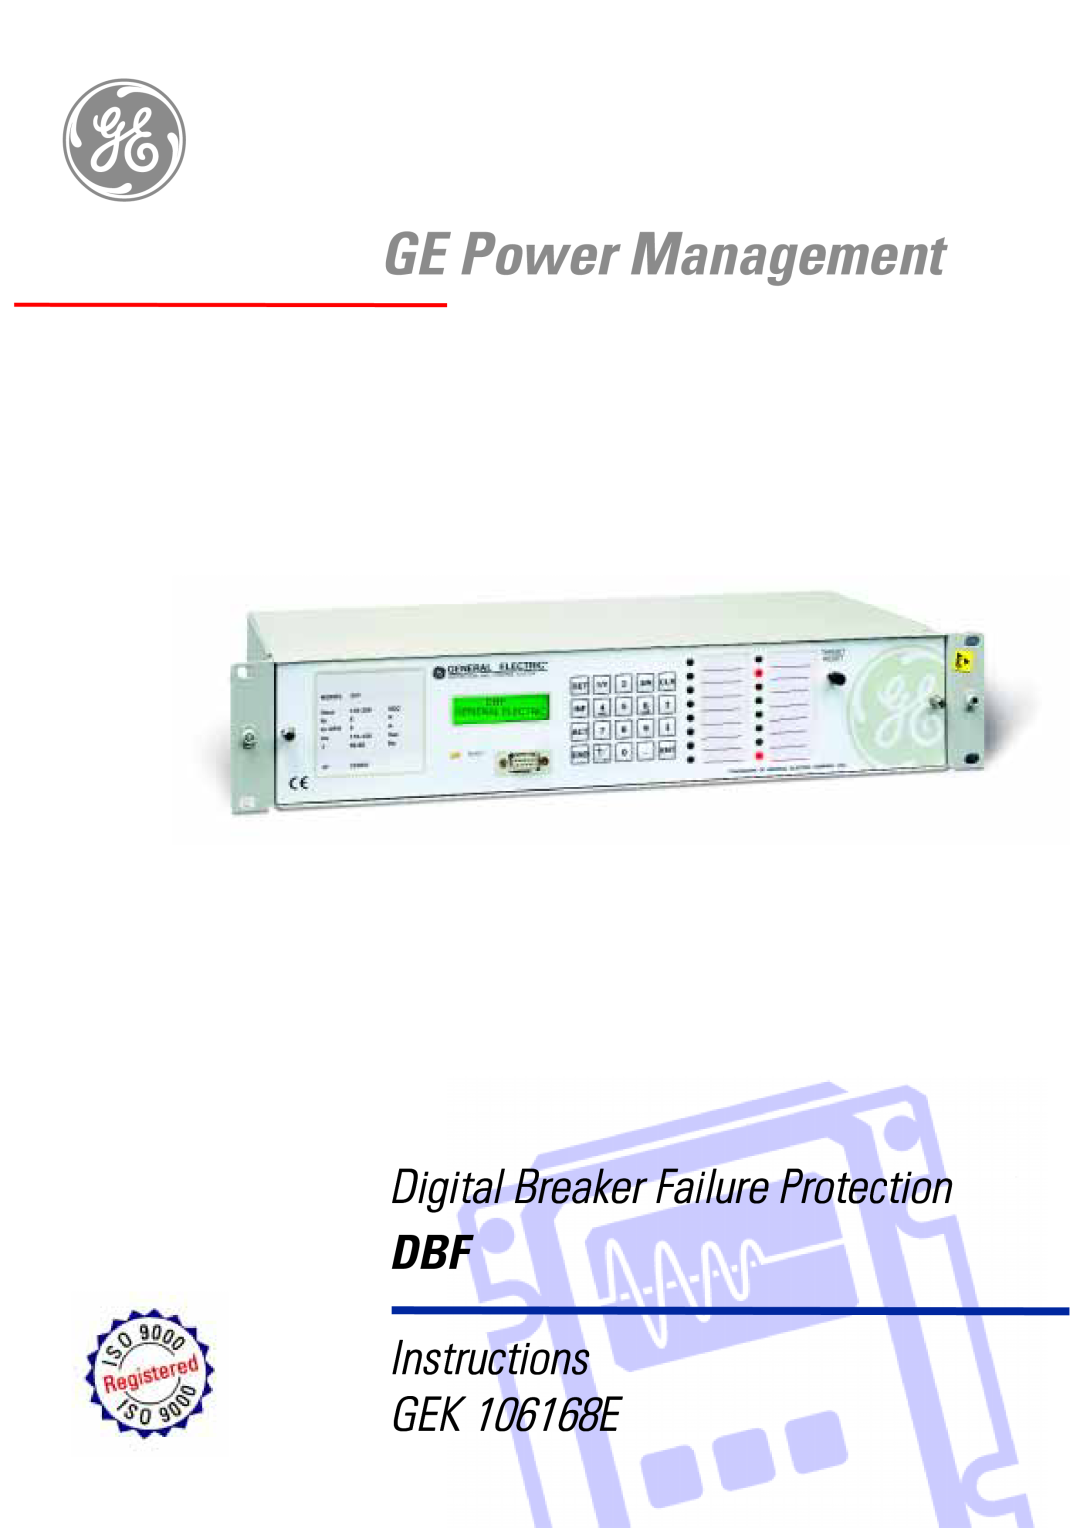 GE manual Instructions GEK 106168E, GE Power Management, Digital Breaker Failure Protection DBF 